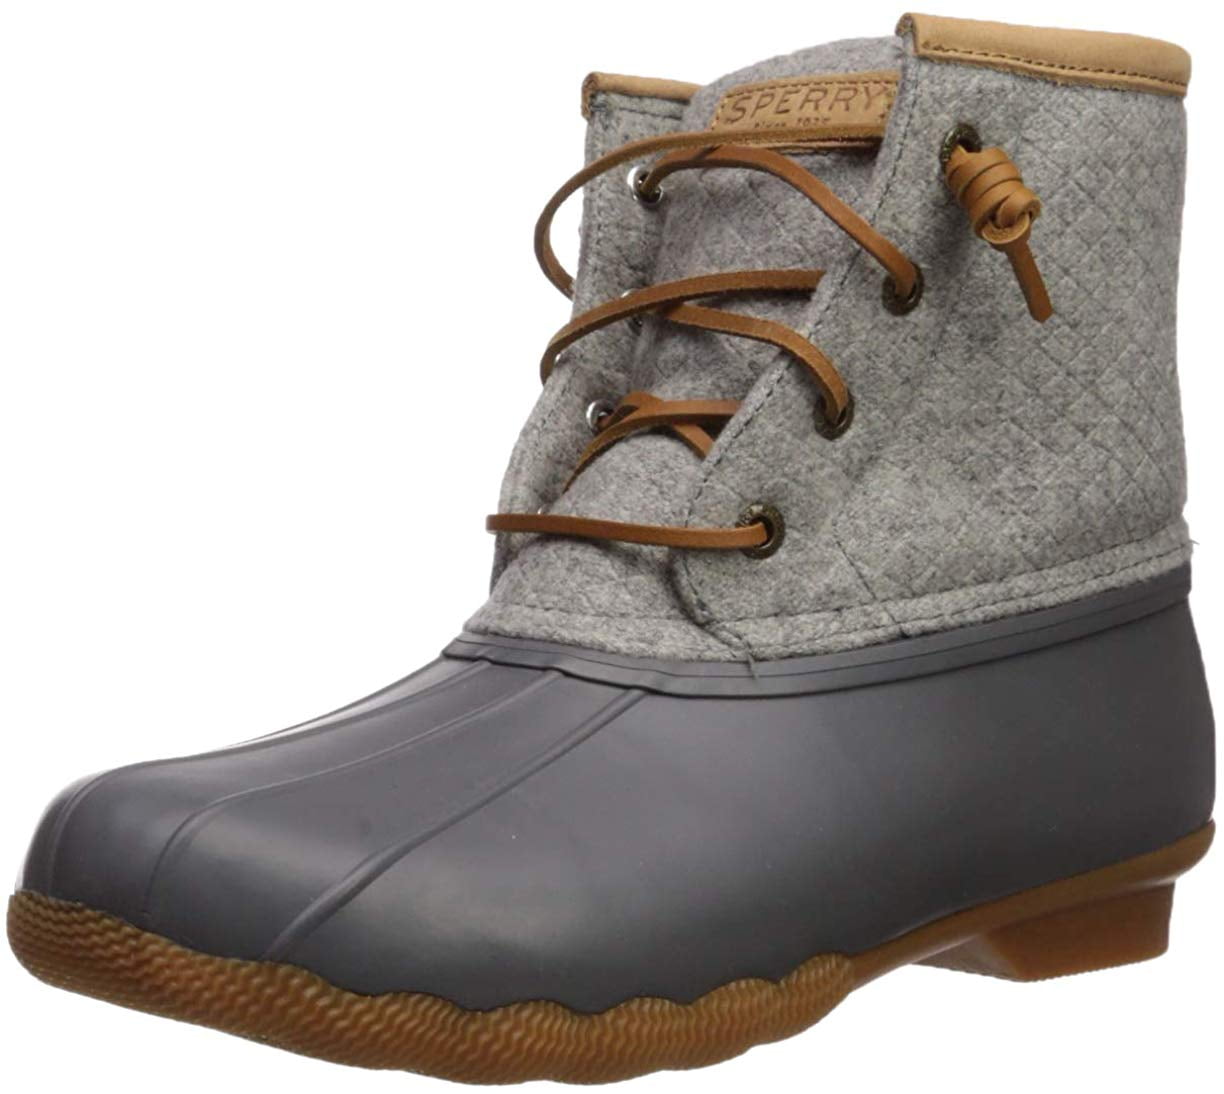 sperry rain boots grey